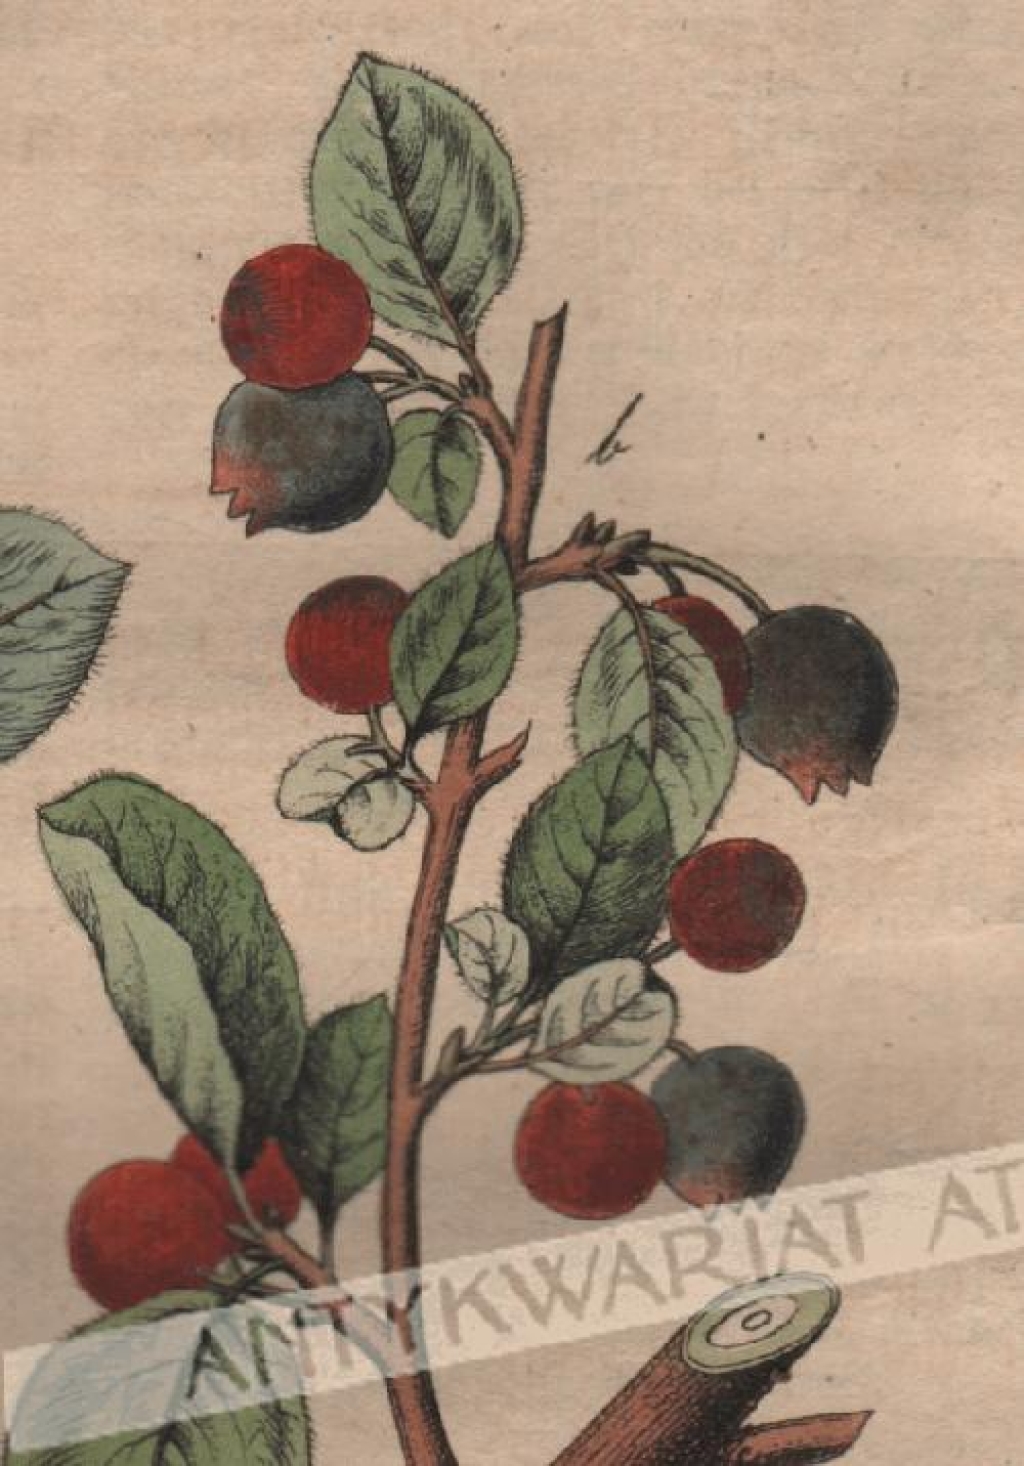 [rycina, 1821] Mespilus cotoneaster. Zwergmispeln [irga czarna]